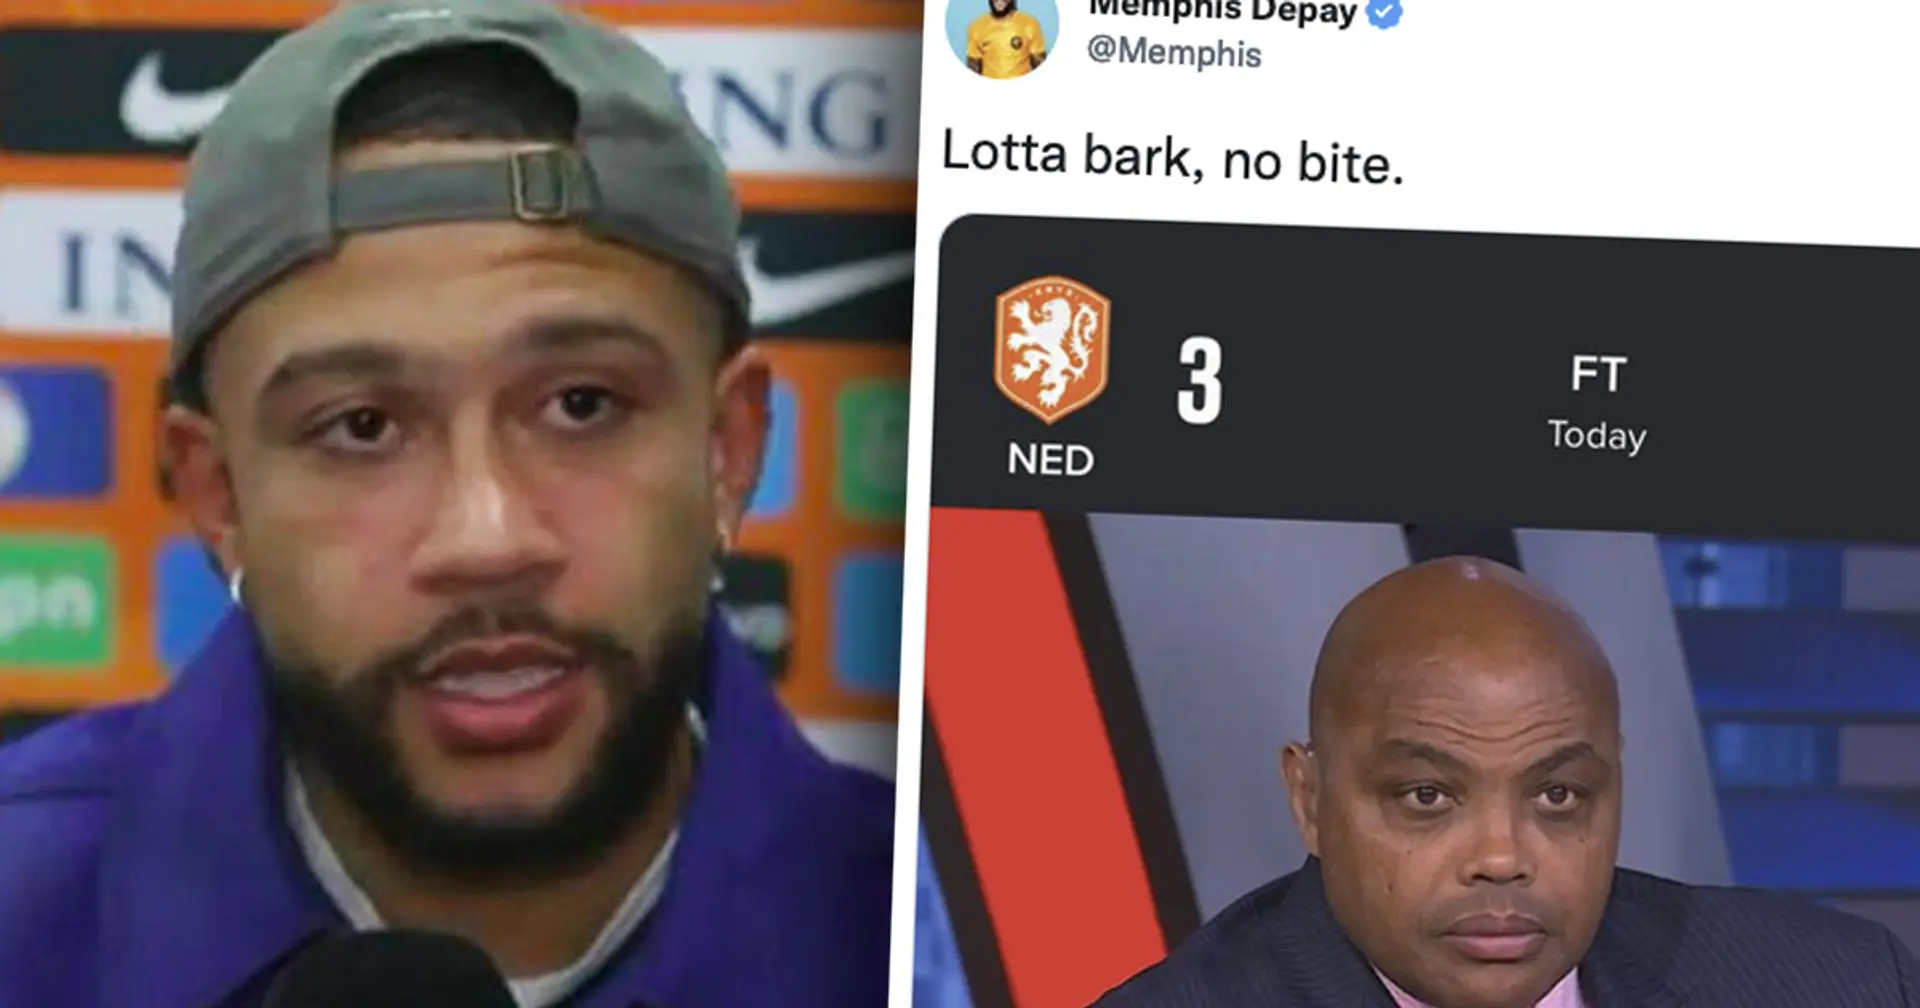 'Lotta bark, no bite': Memphis mocks TV pundit after the Netherlands beat USA at World Cup